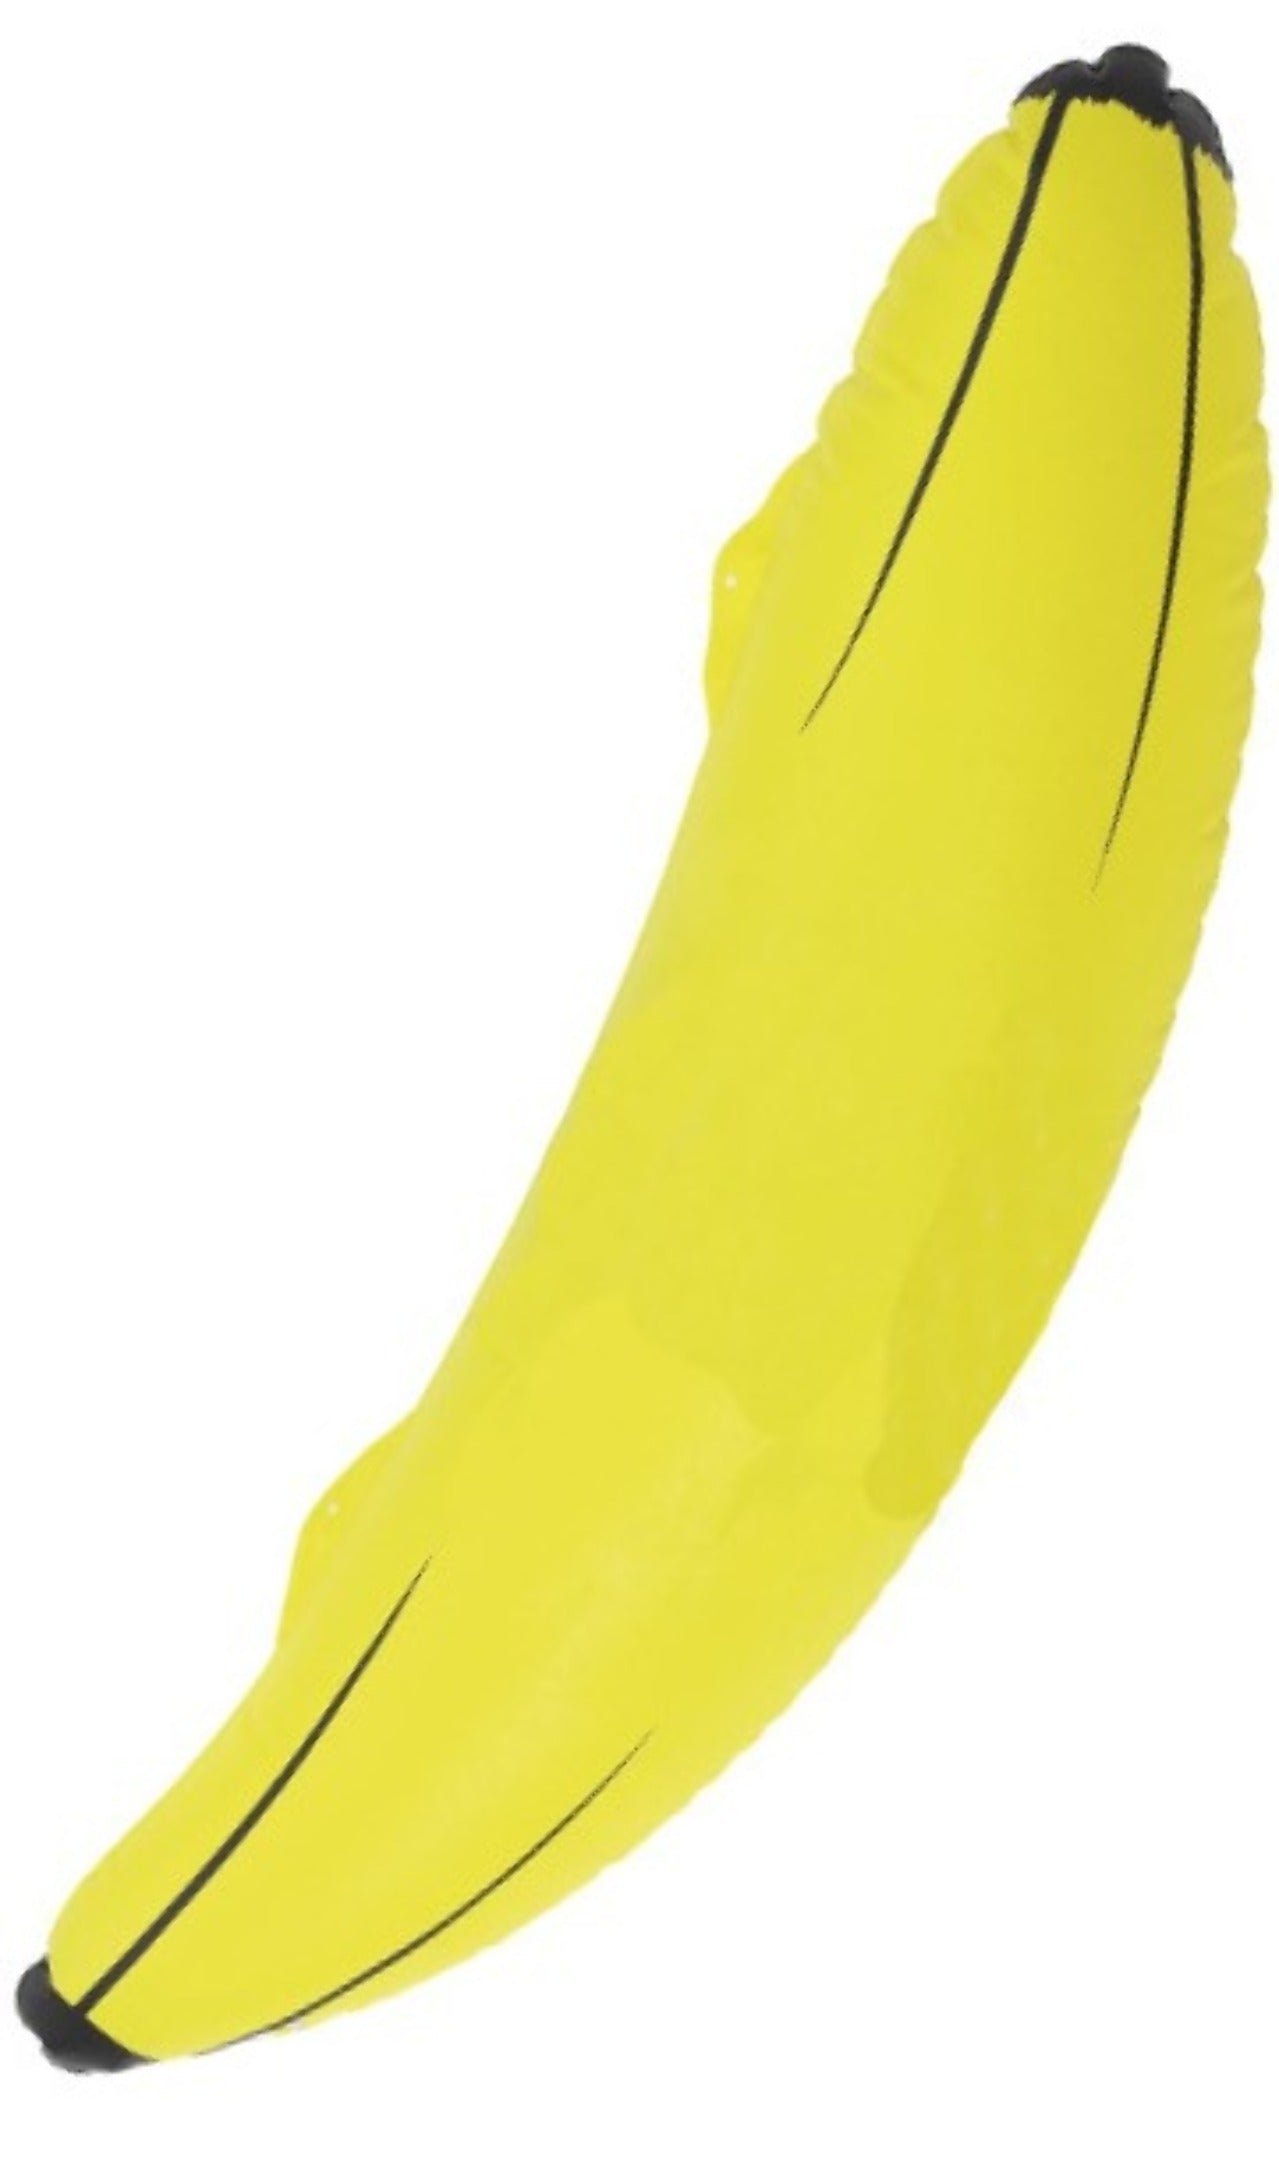 Acquista online Banana Gonfiabile